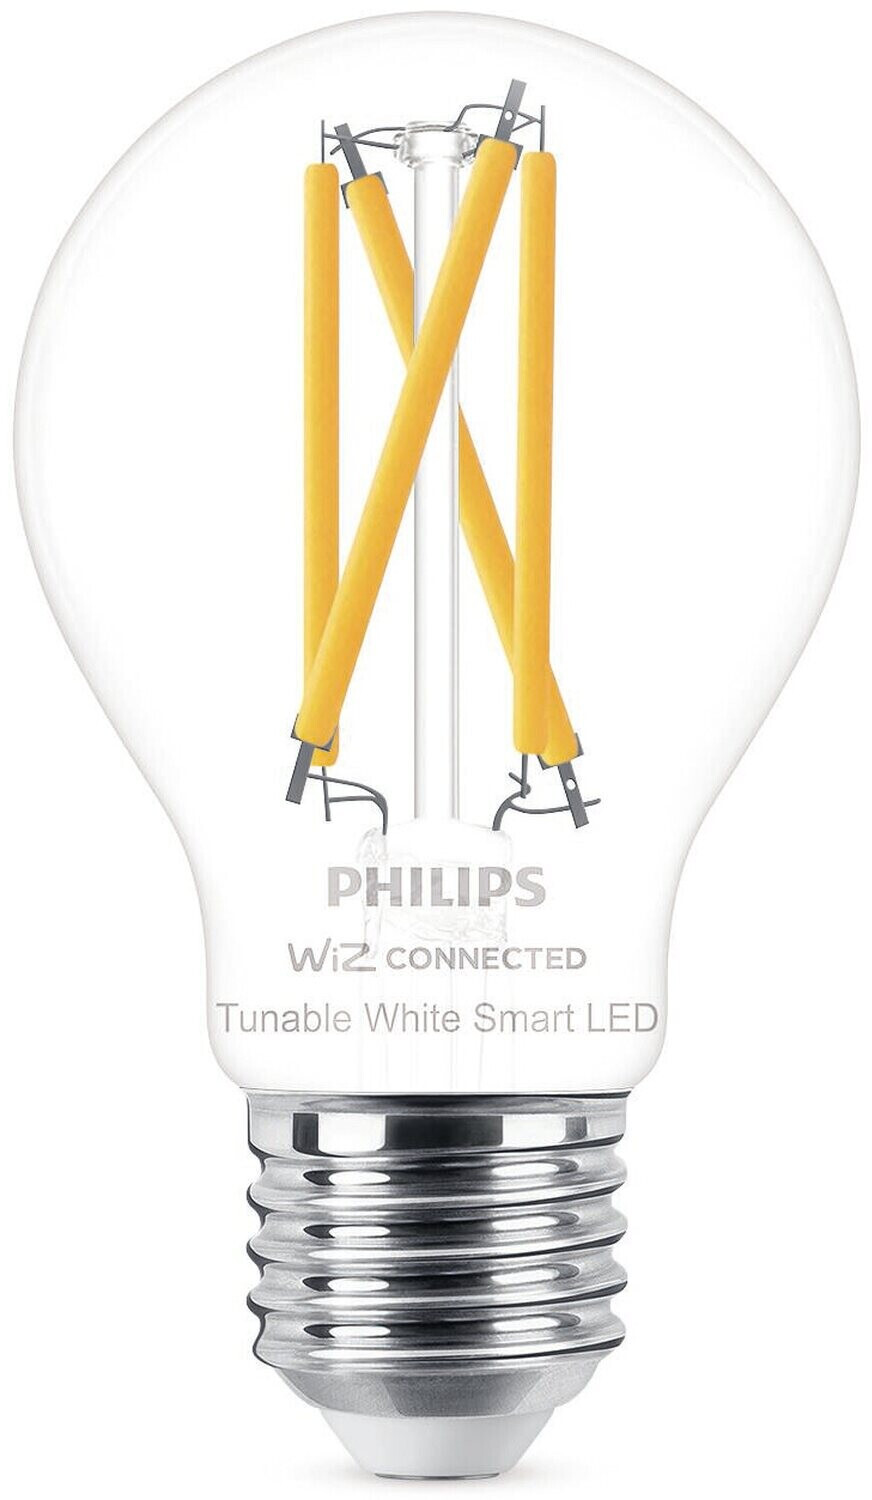 EYLA E27 Filament LED Lampen smarte App- & Sprachsteuerung über